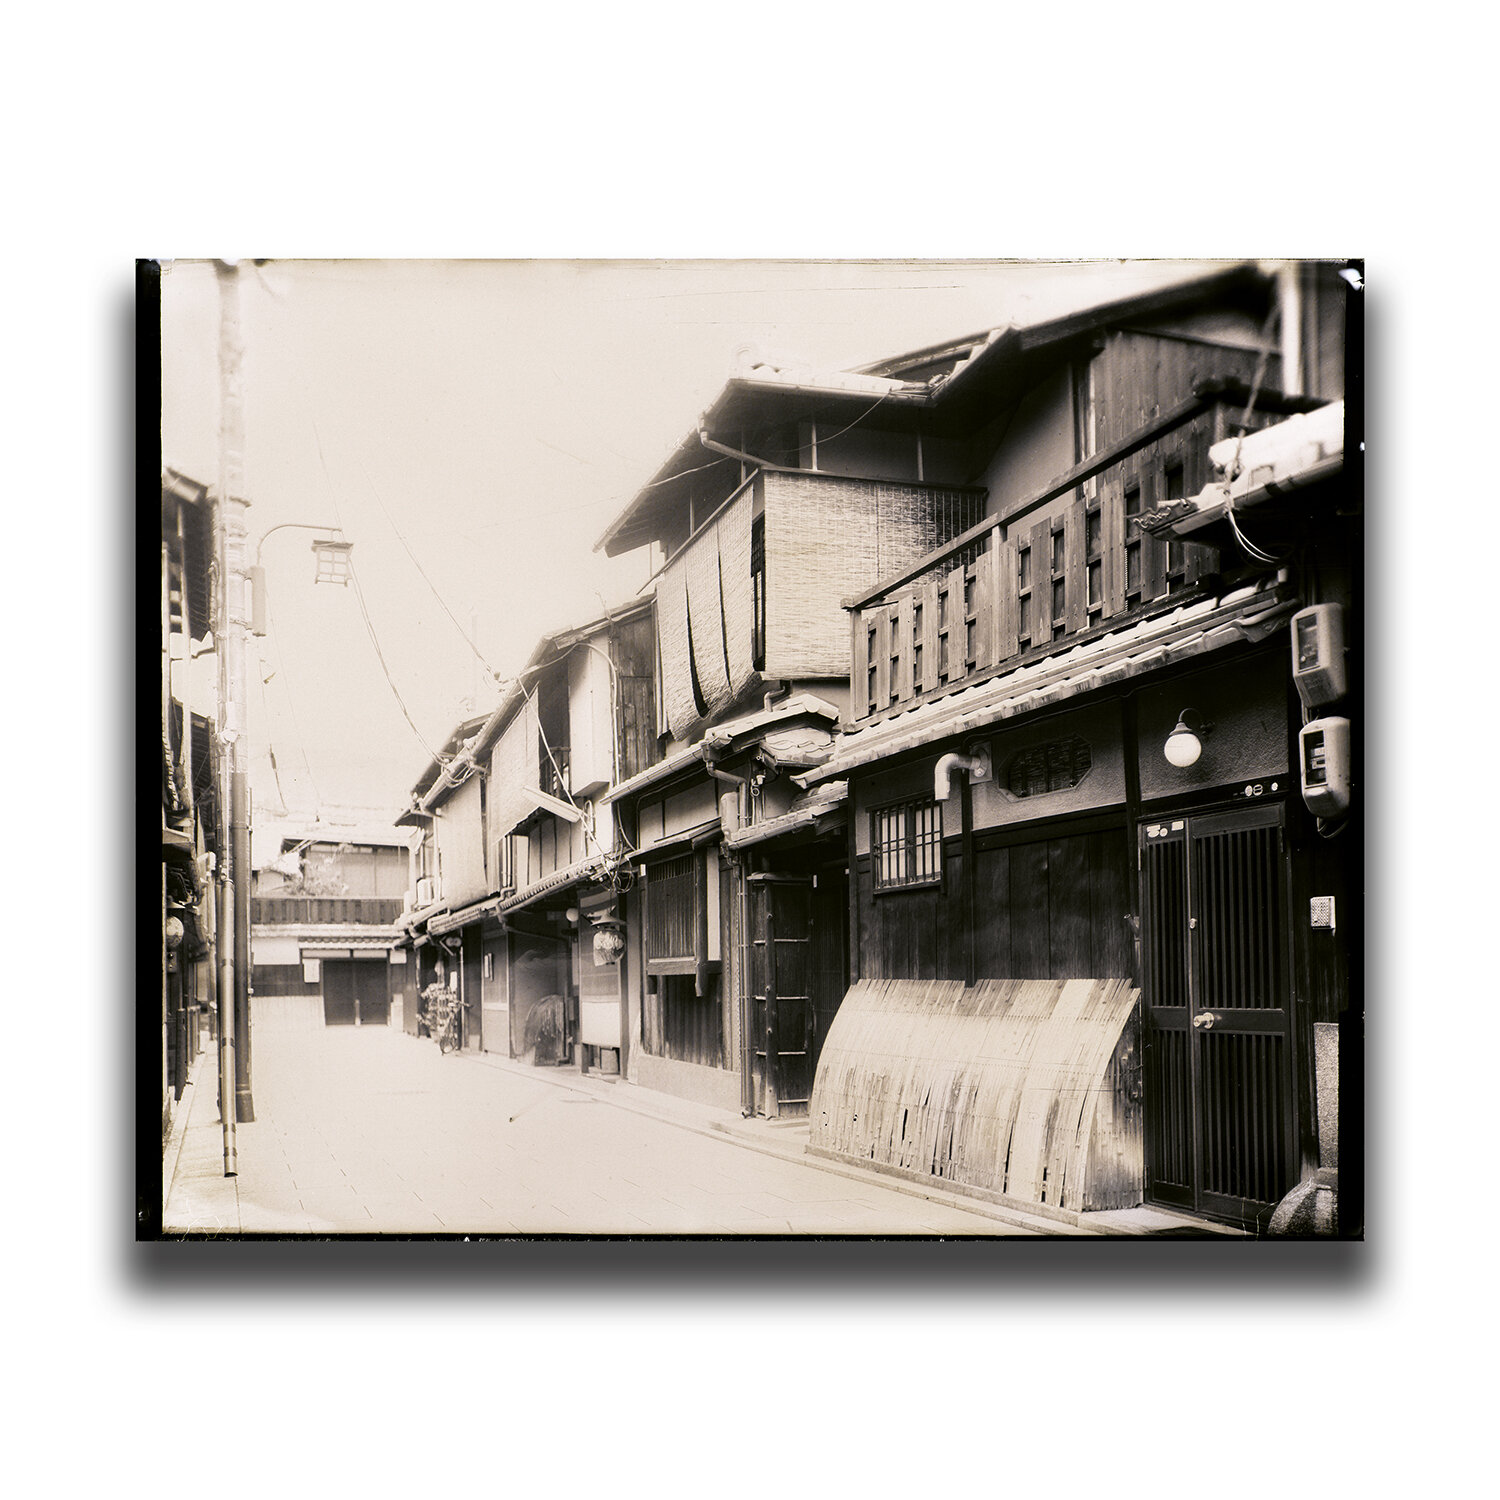 Kyoto・Hanamikoji-dori Street/京都・花見小路通/교토・꽃놀이 골목/京都・花見小路通